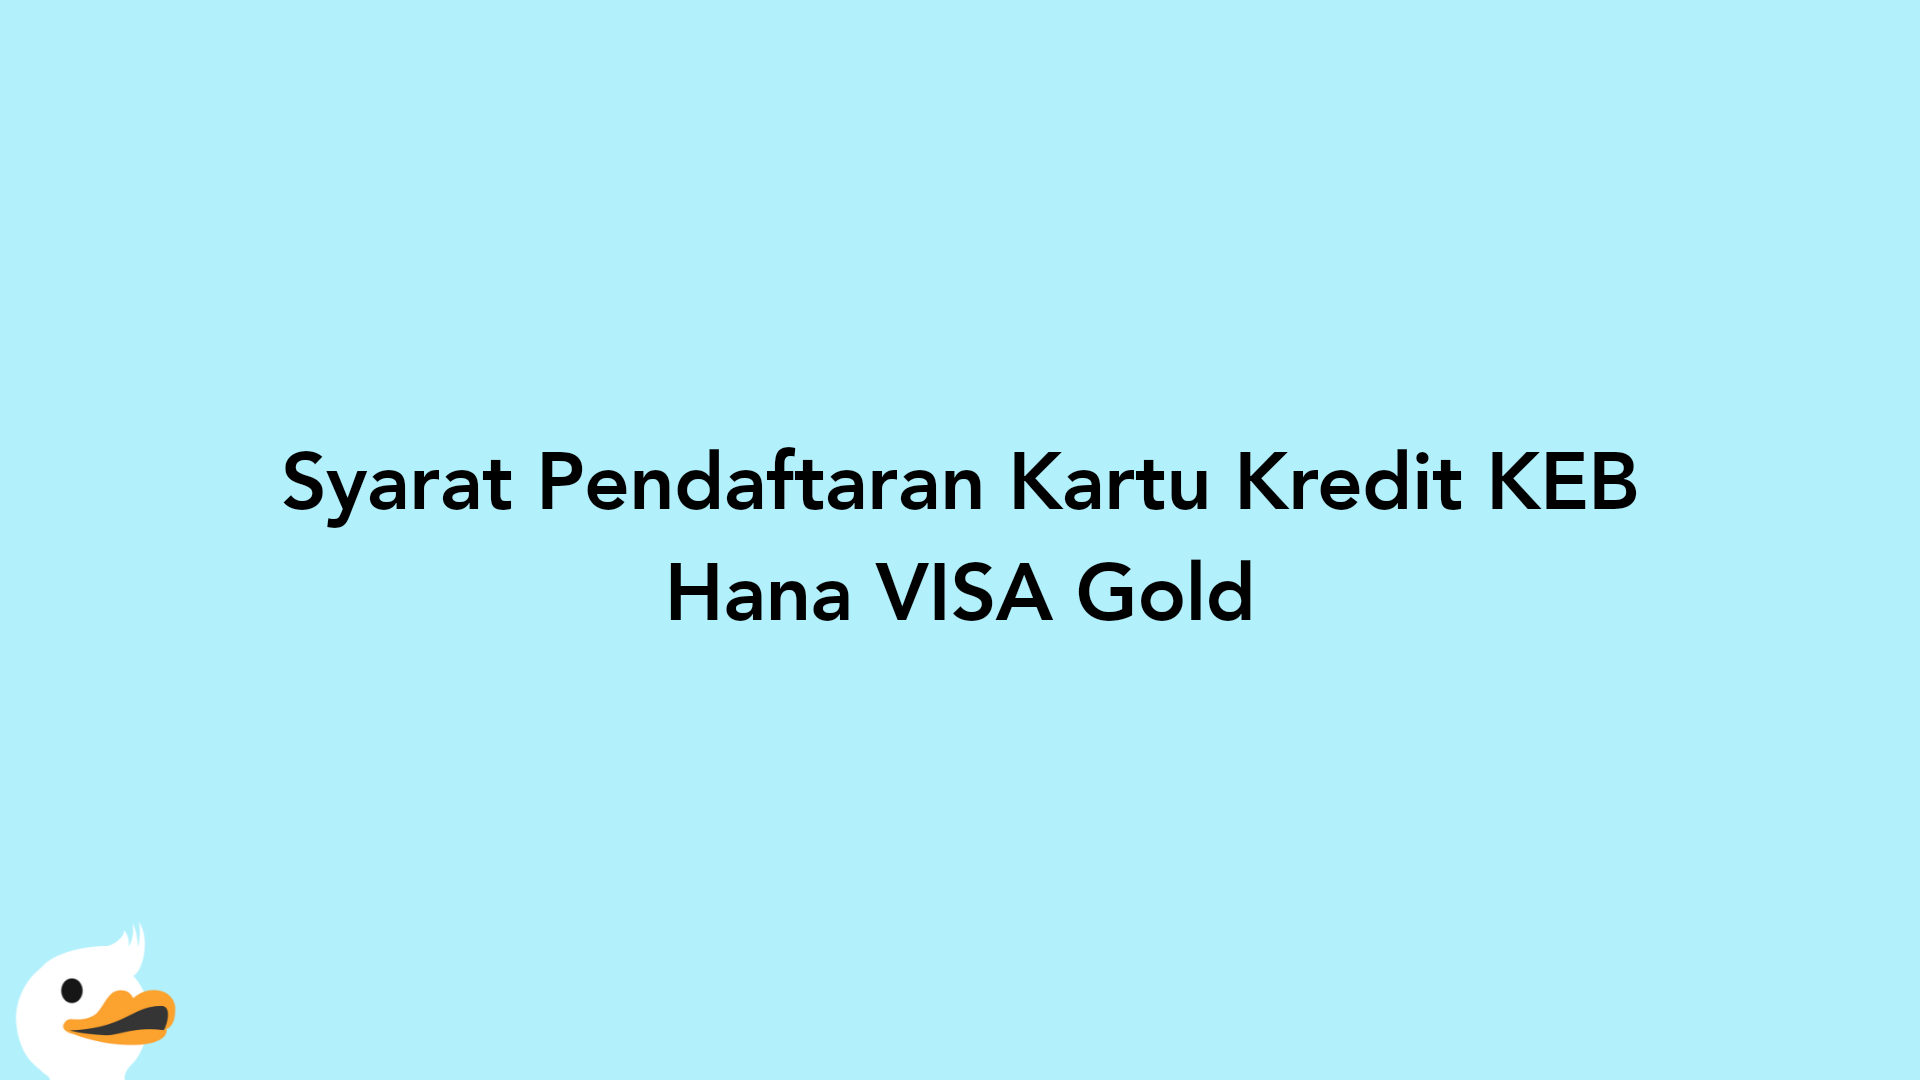 Syarat Pendaftaran Kartu Kredit KEB Hana VISA Gold